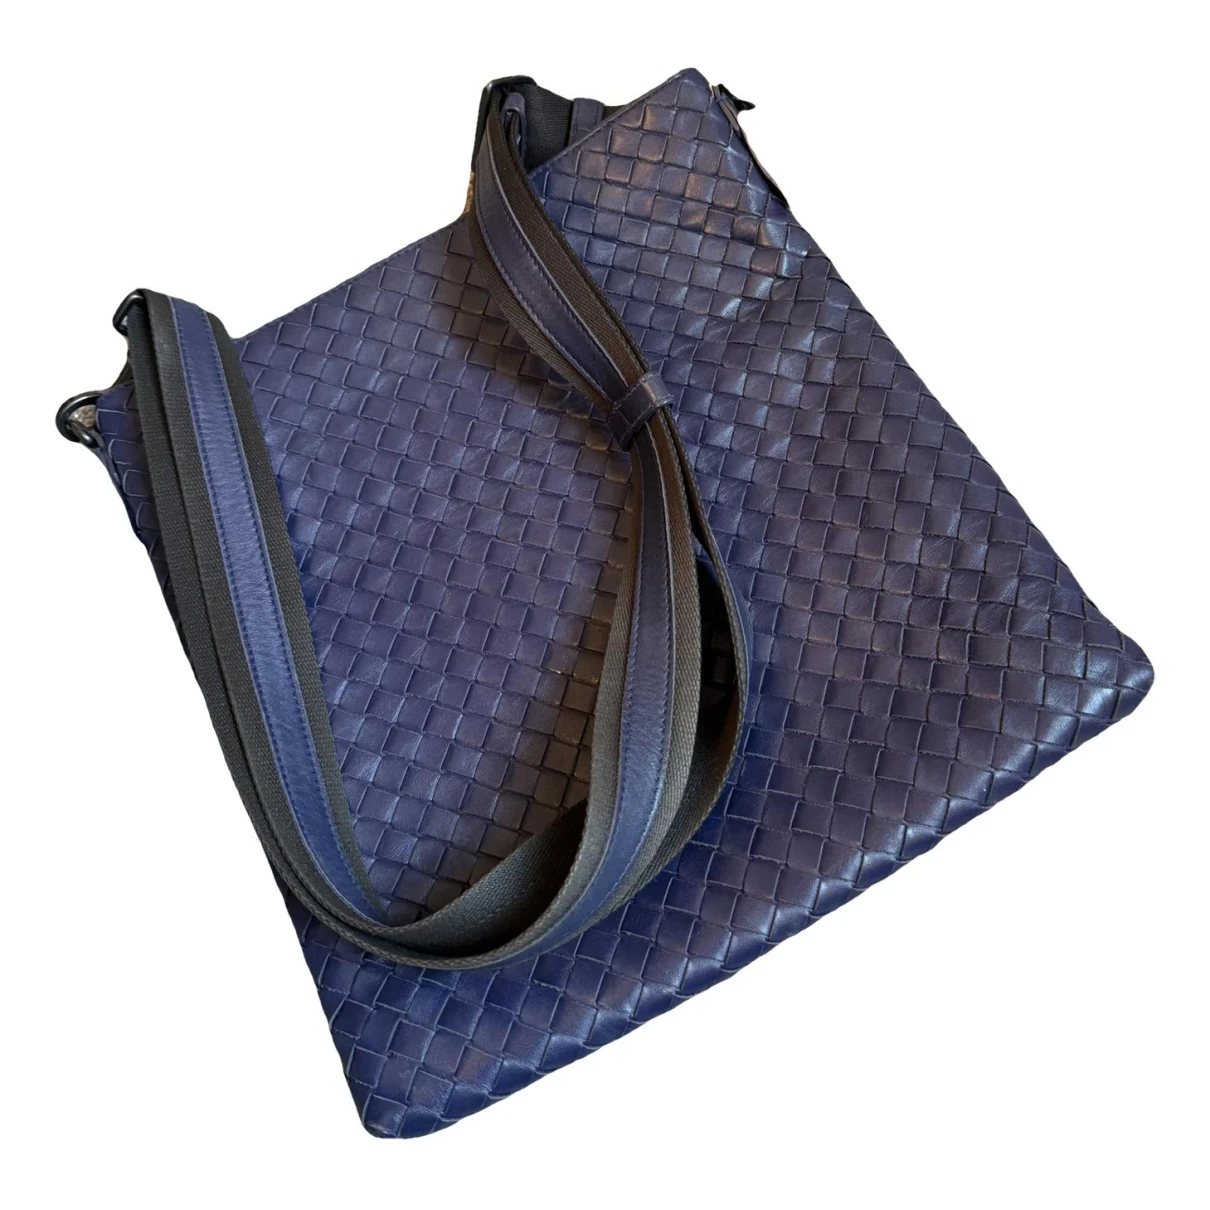 Pre-owned Bottega Veneta Leather Handbag In Purple